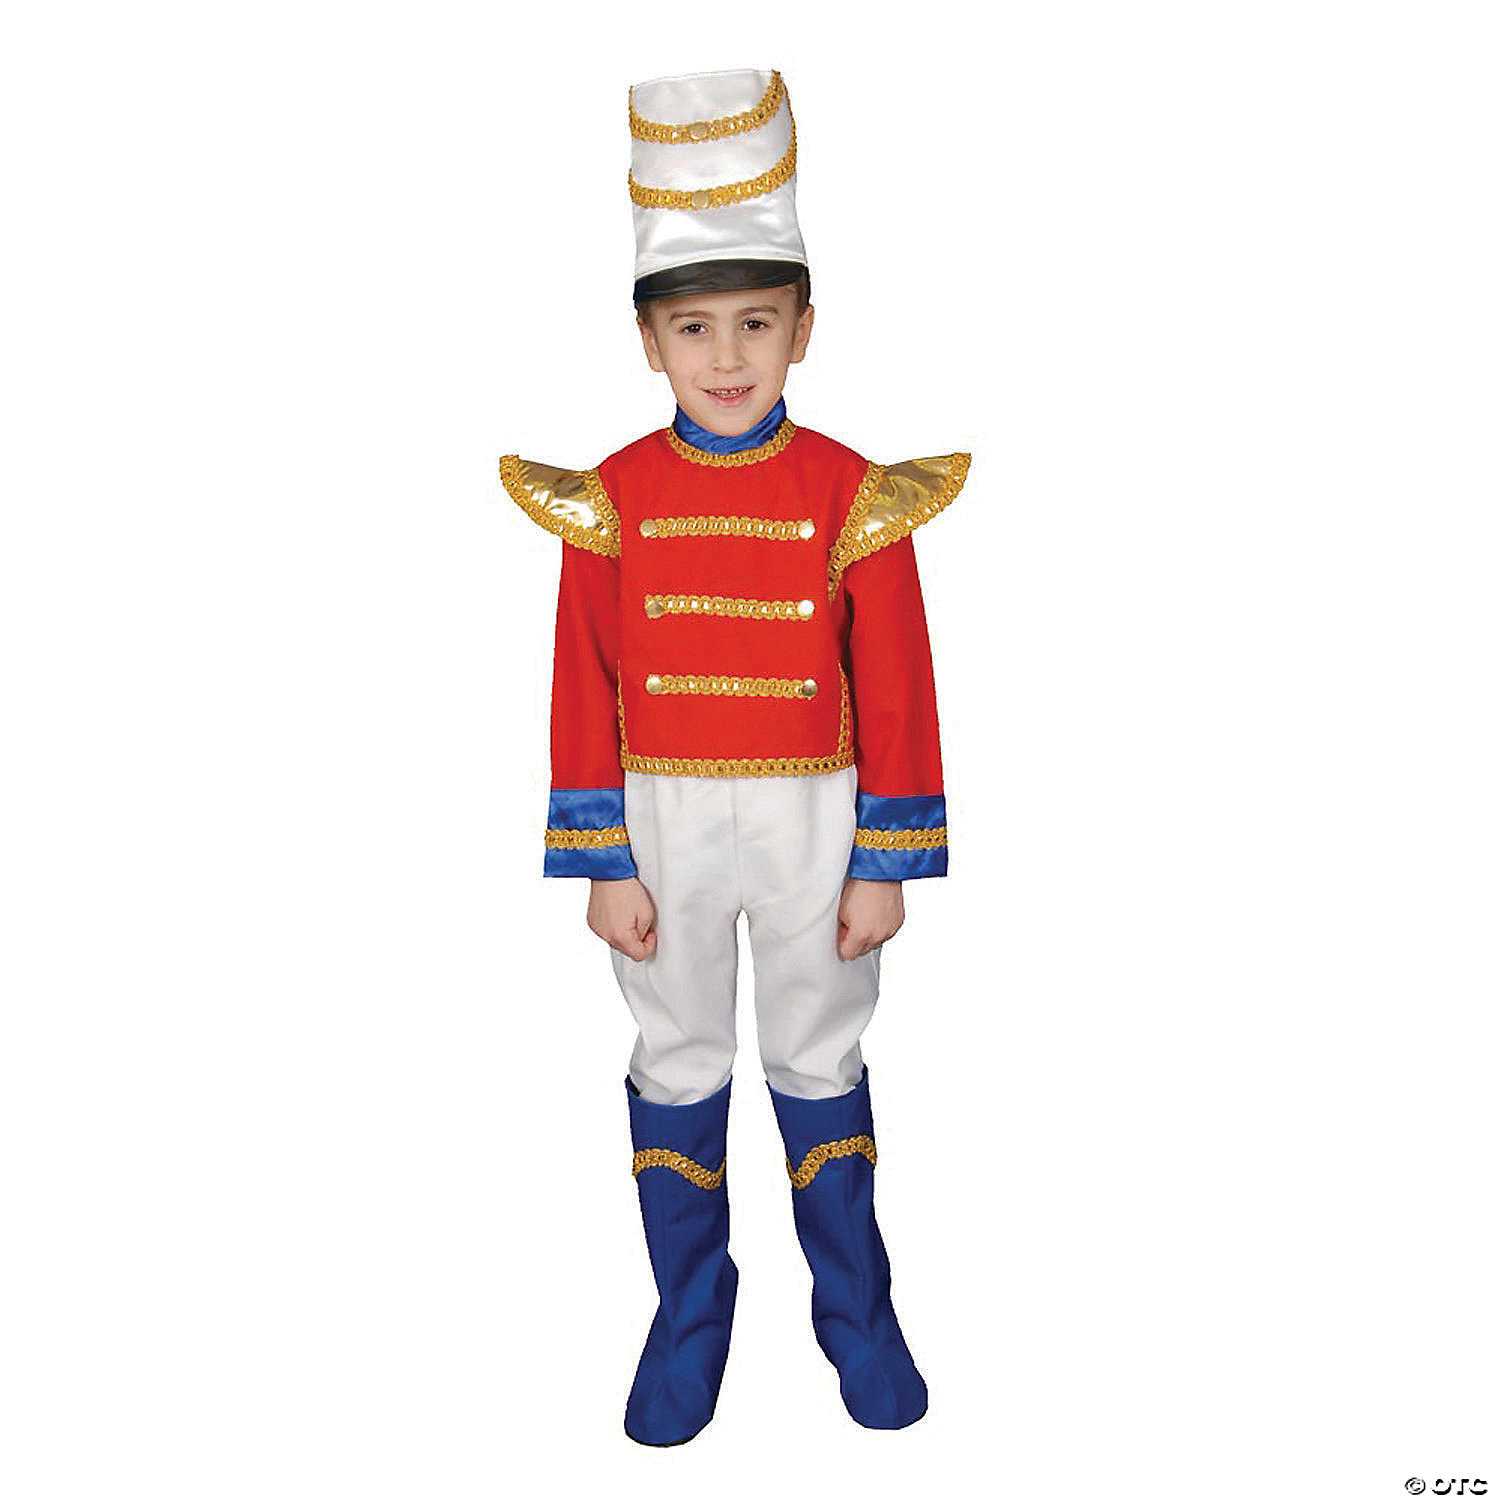 Toy Soldier Child Costume